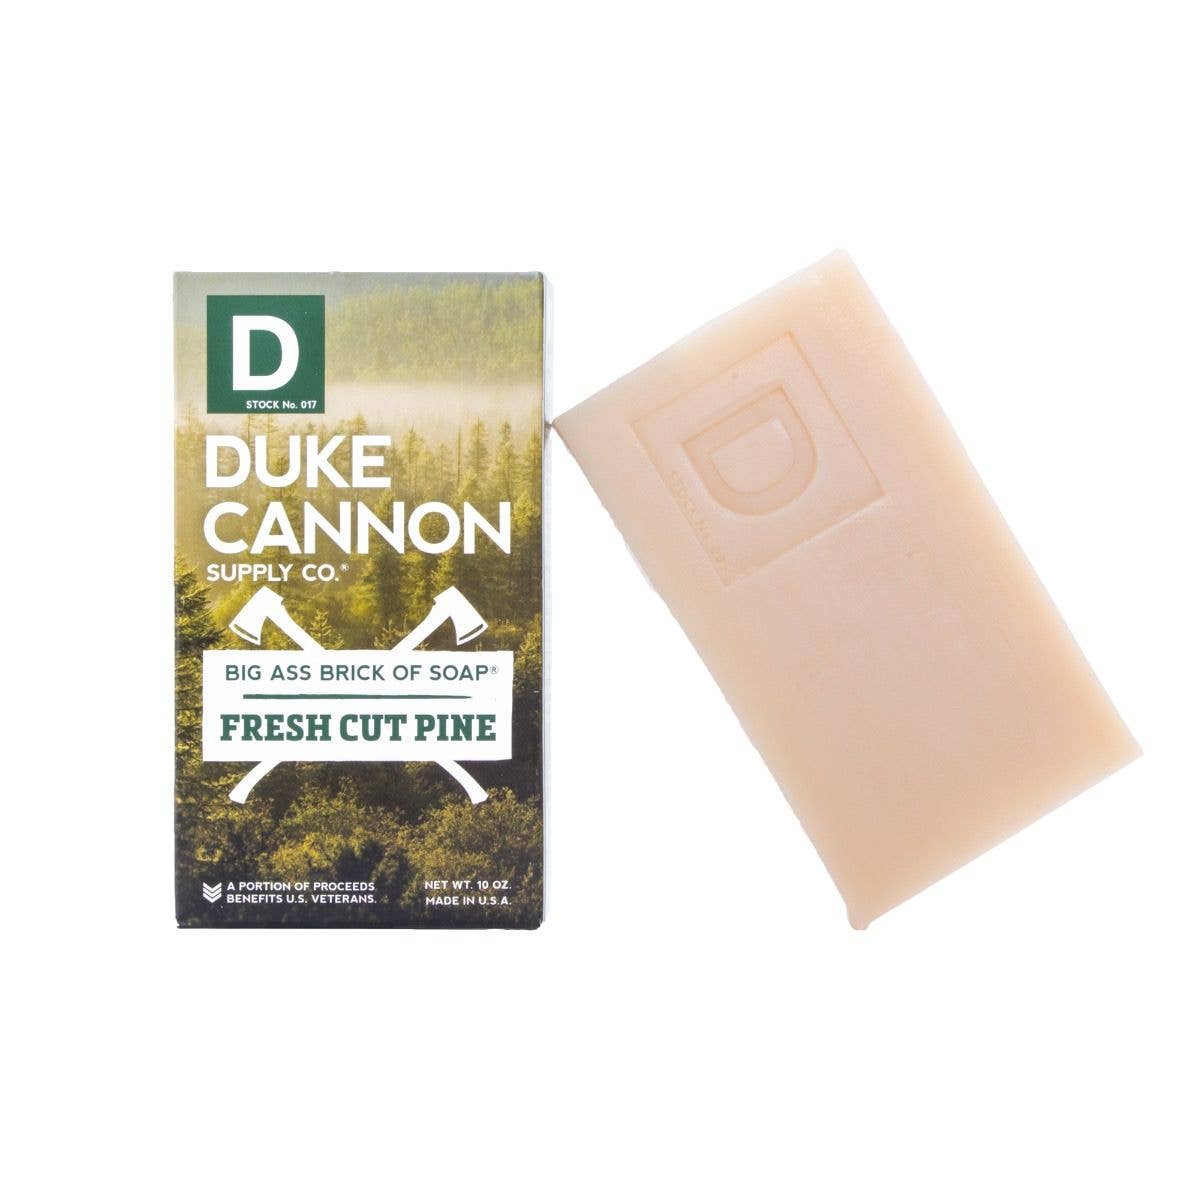 duke cannon box next to bar of soap